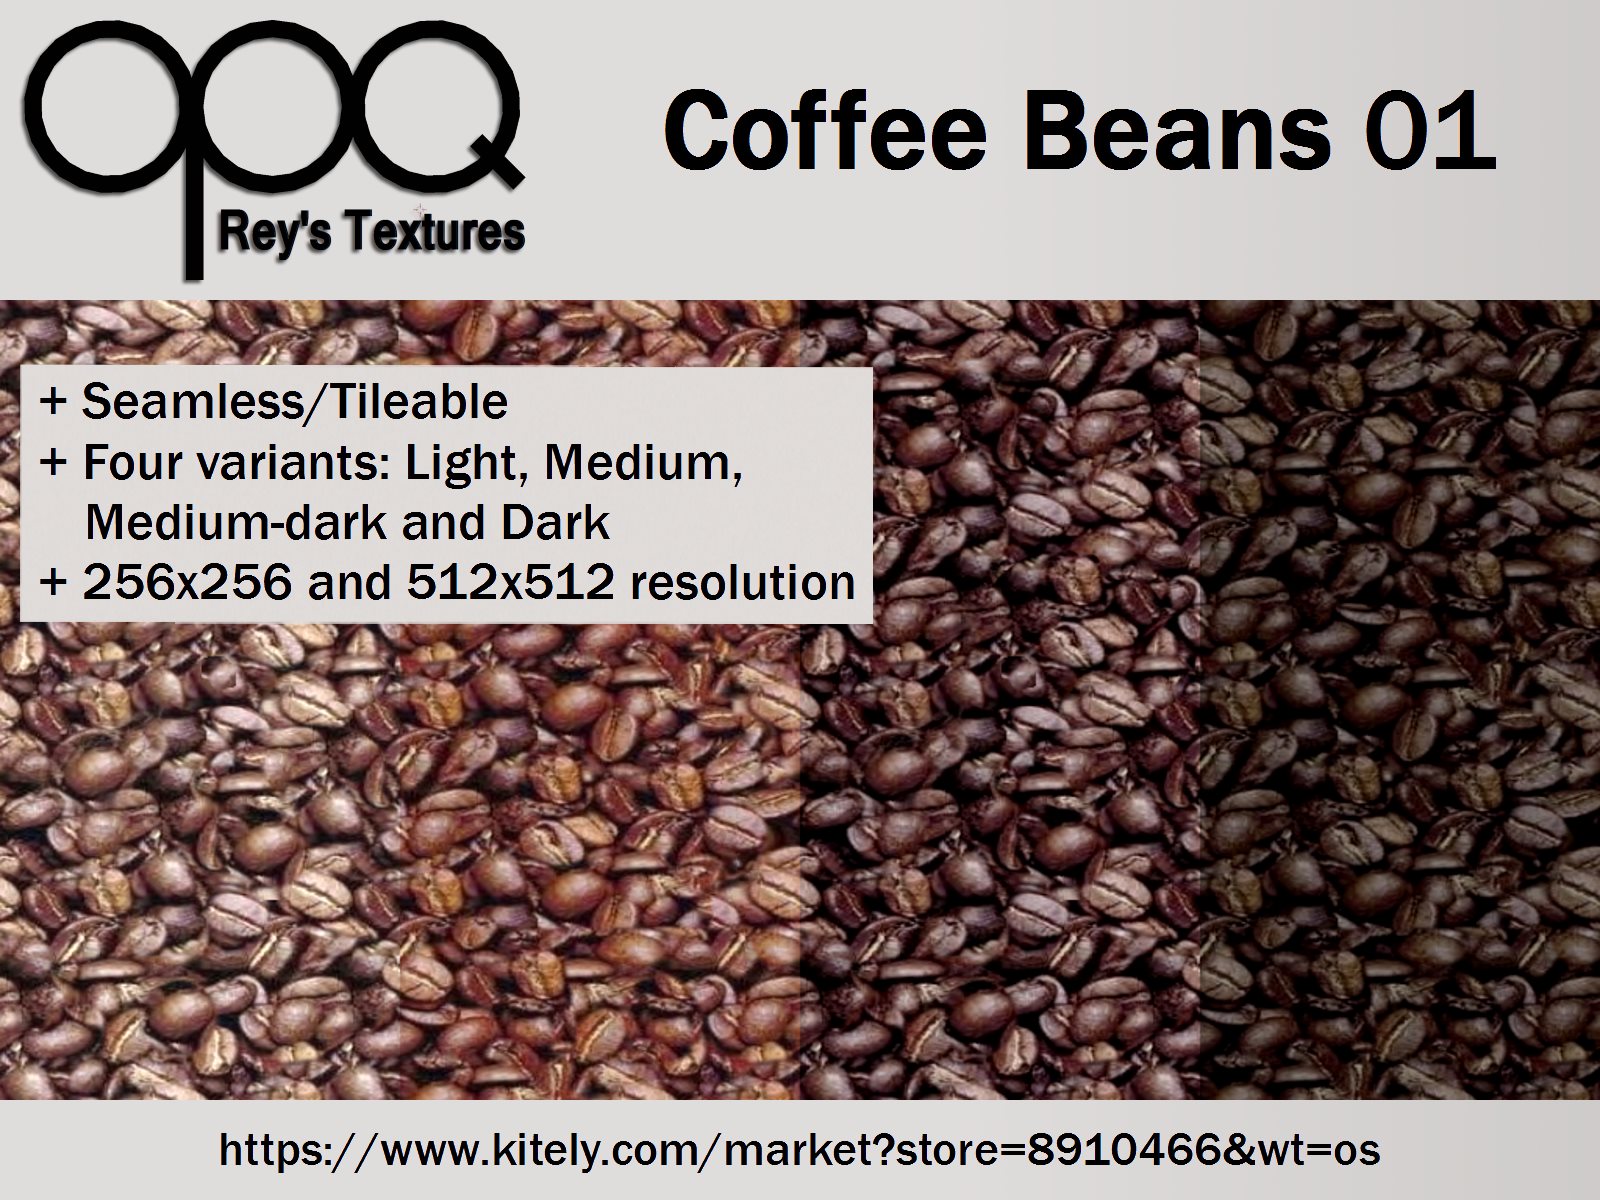 Rey's Coffee Beans 01 poster Kitely.jpg